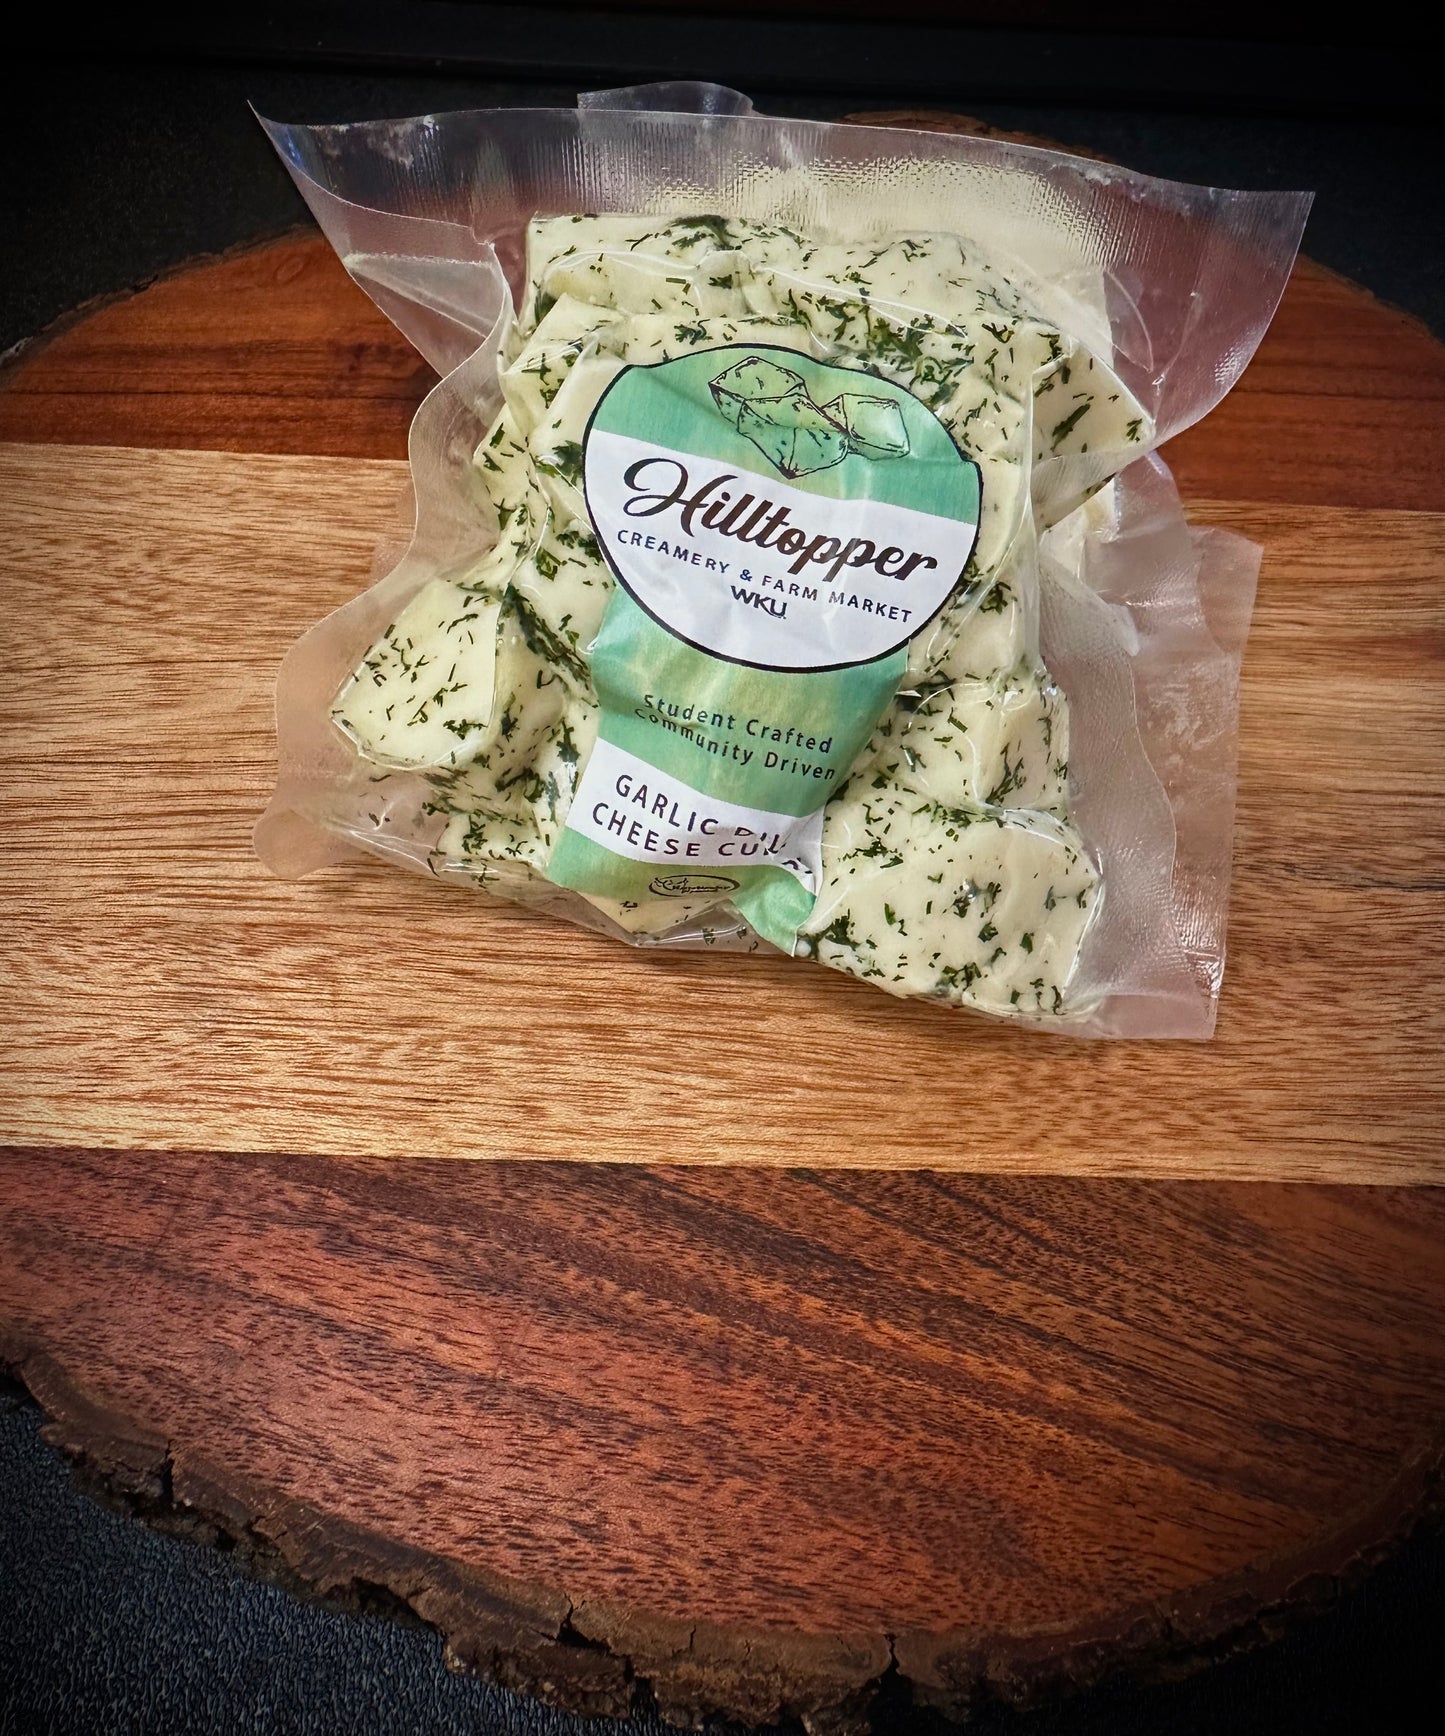 Cheddar-Fresh Cheese Curds 1/2 lb. Package